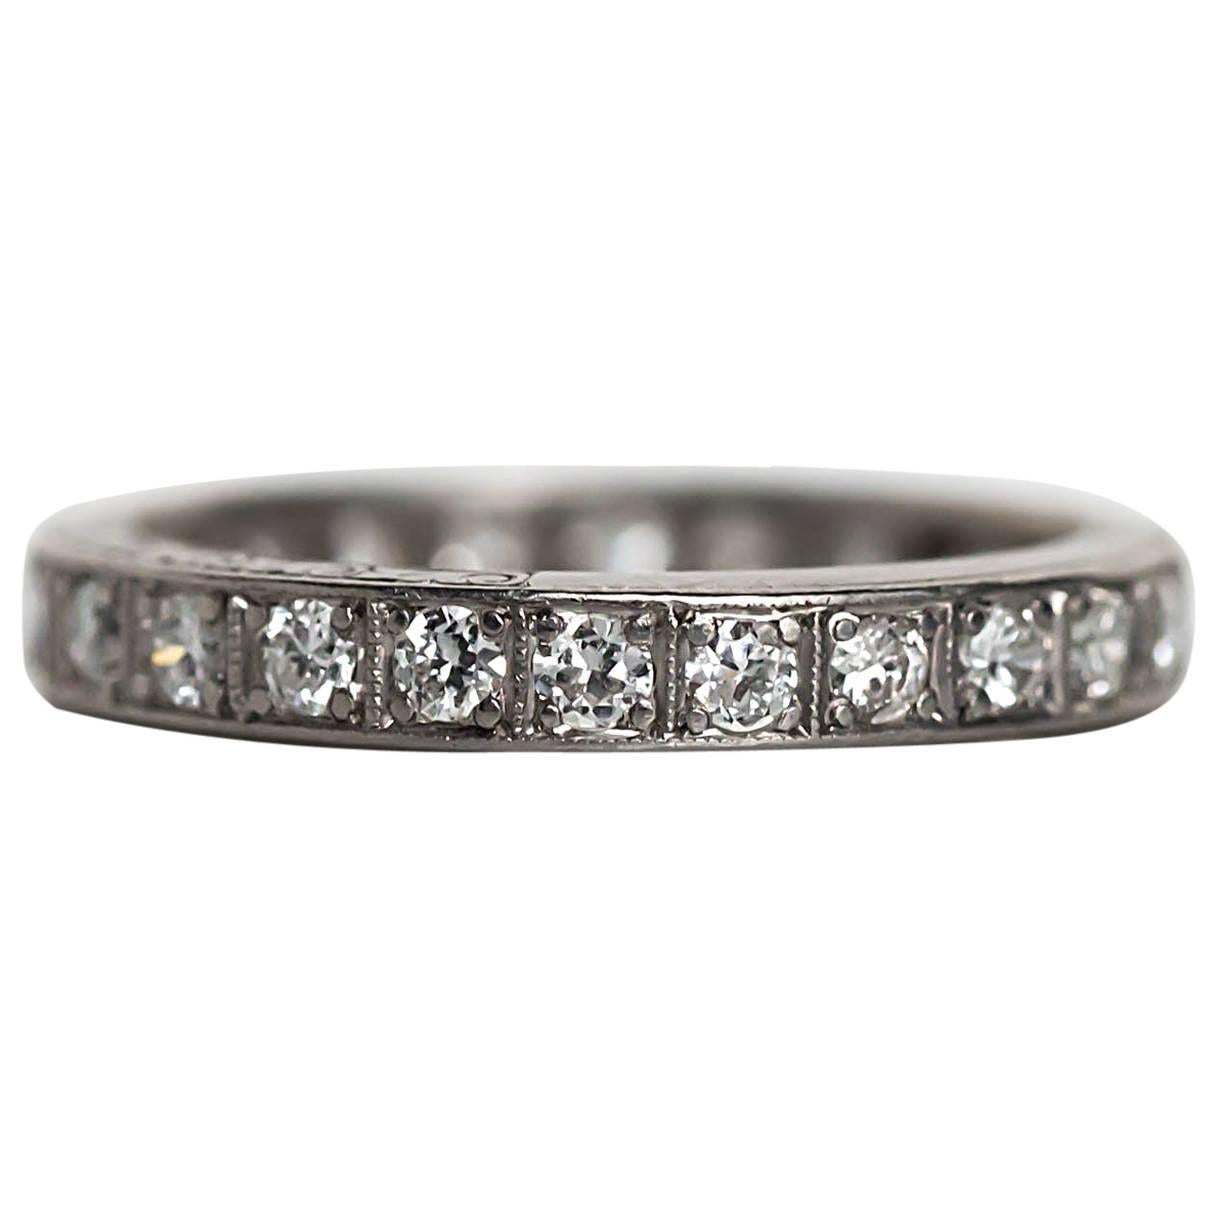 1910s Art Deco Old European Cut Diamond Platinum Eternity Band Ring